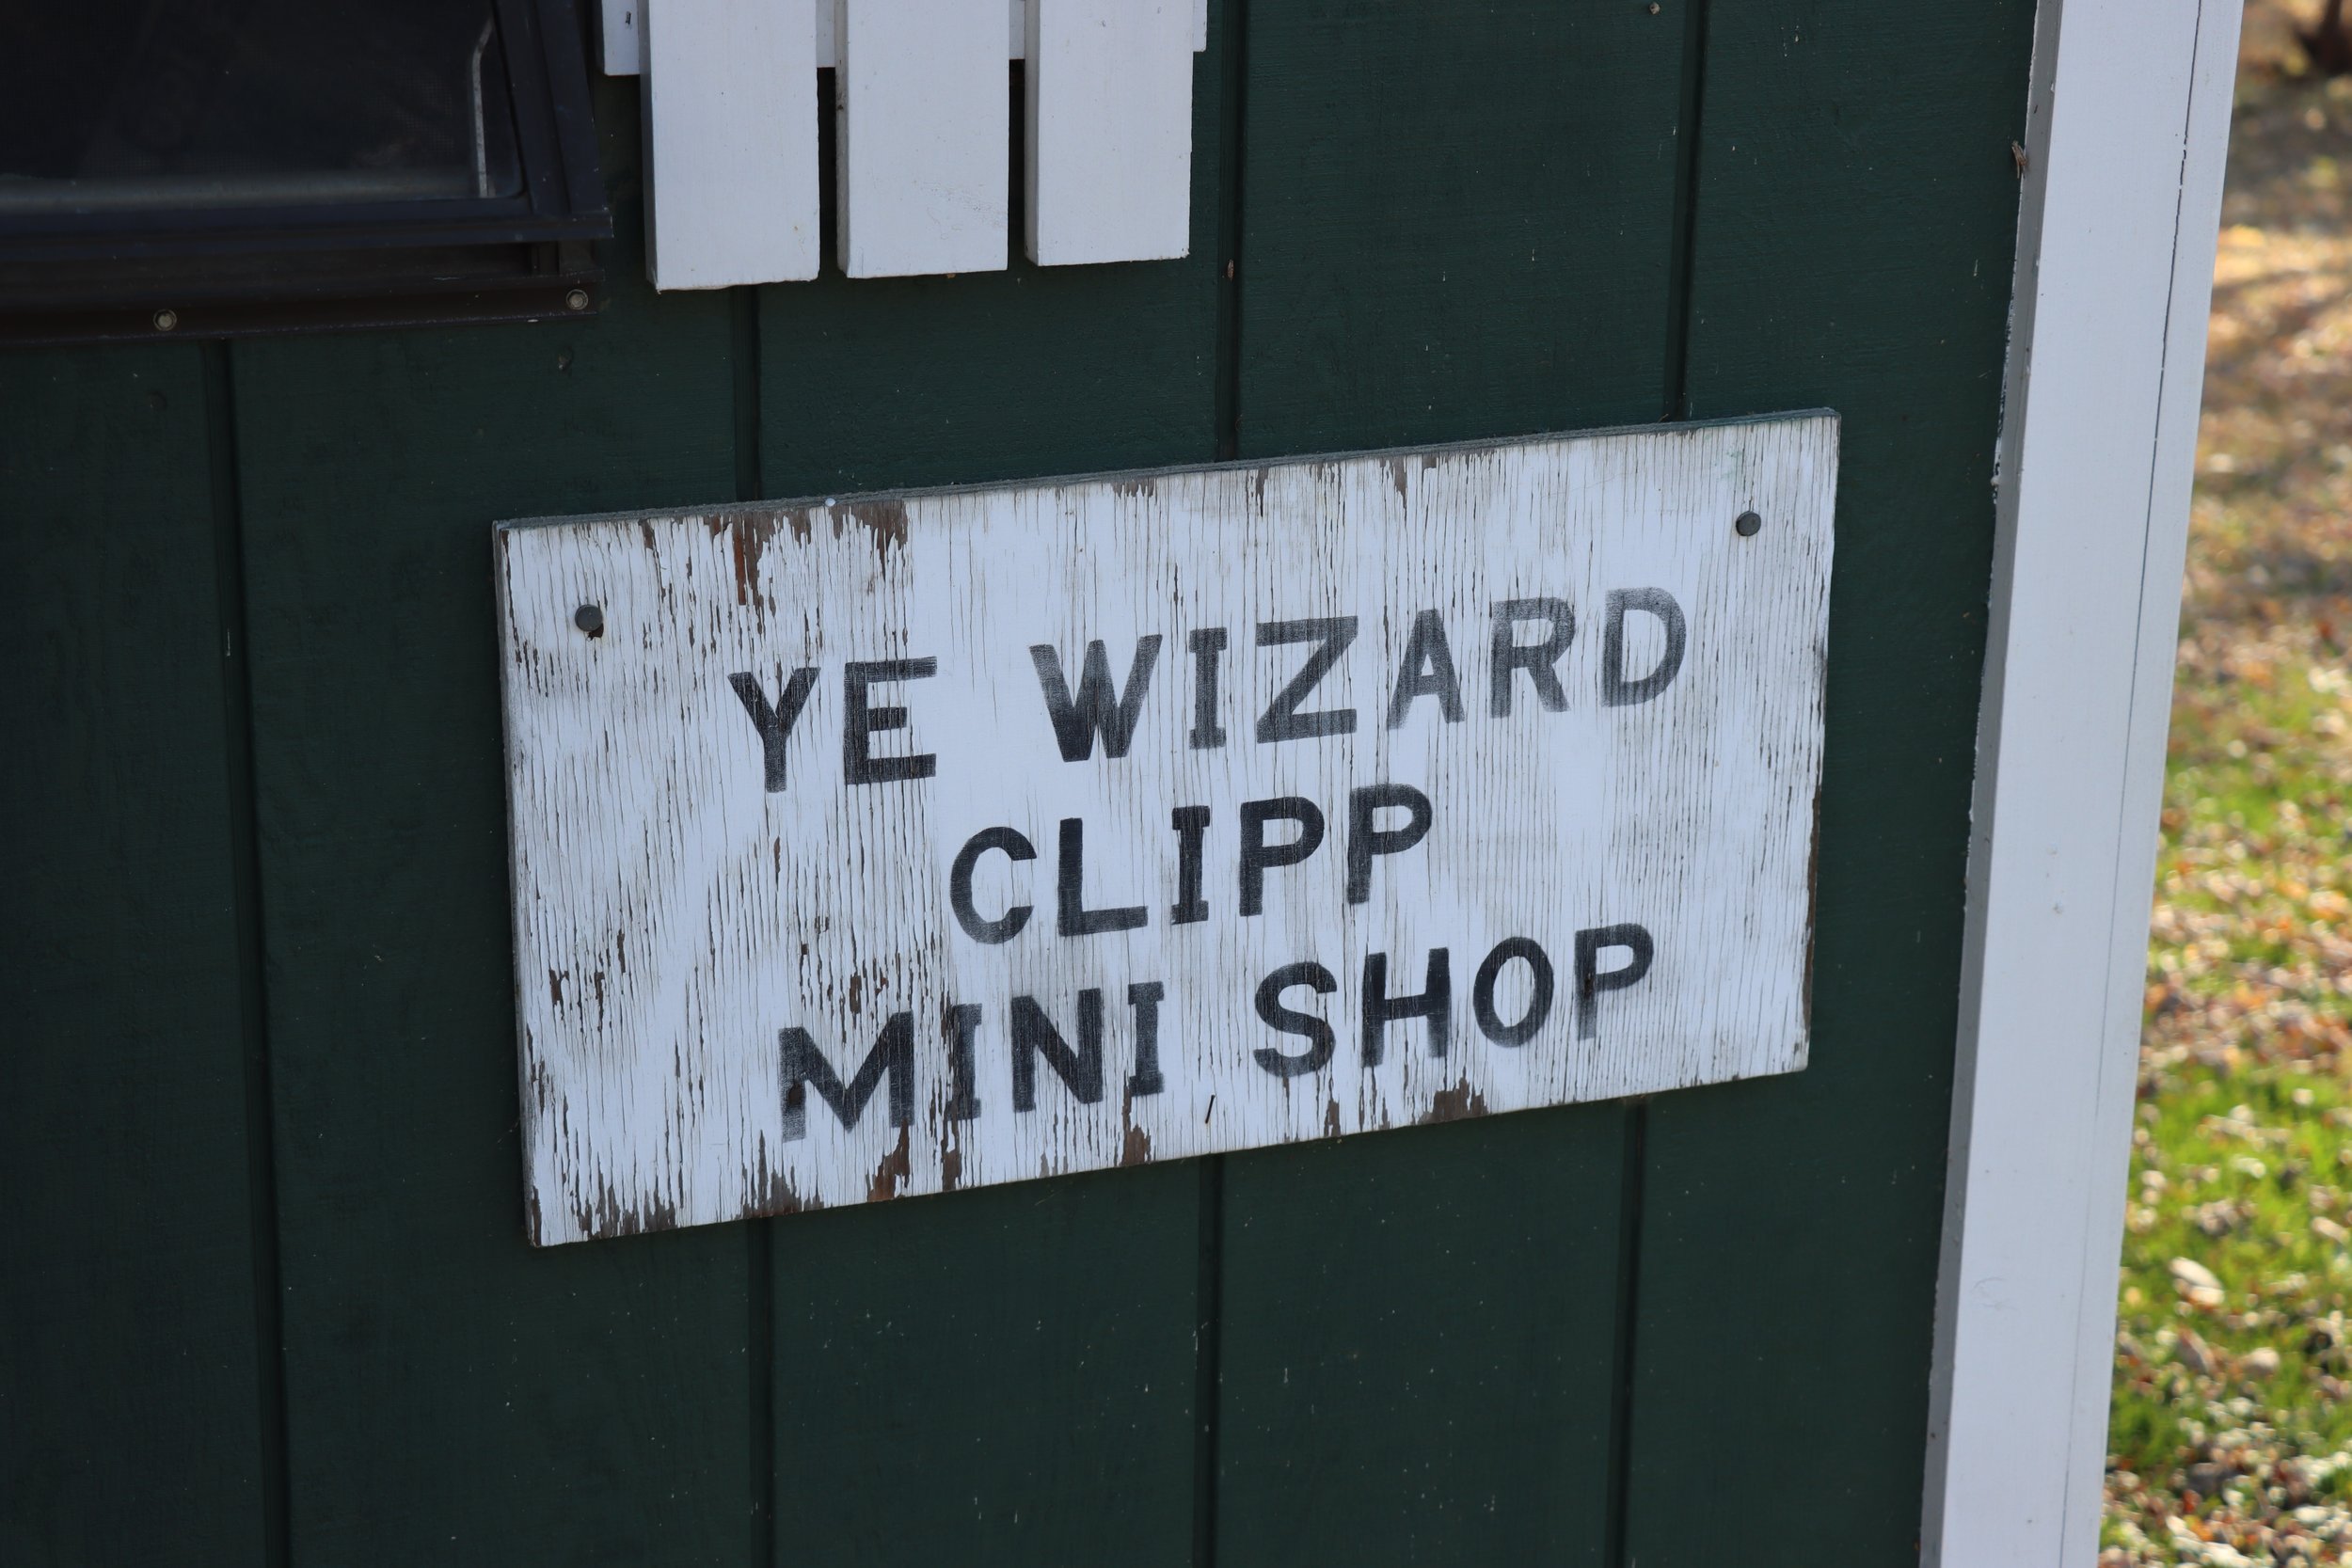  Neighborhood Wizard Clipp Shop sign. 